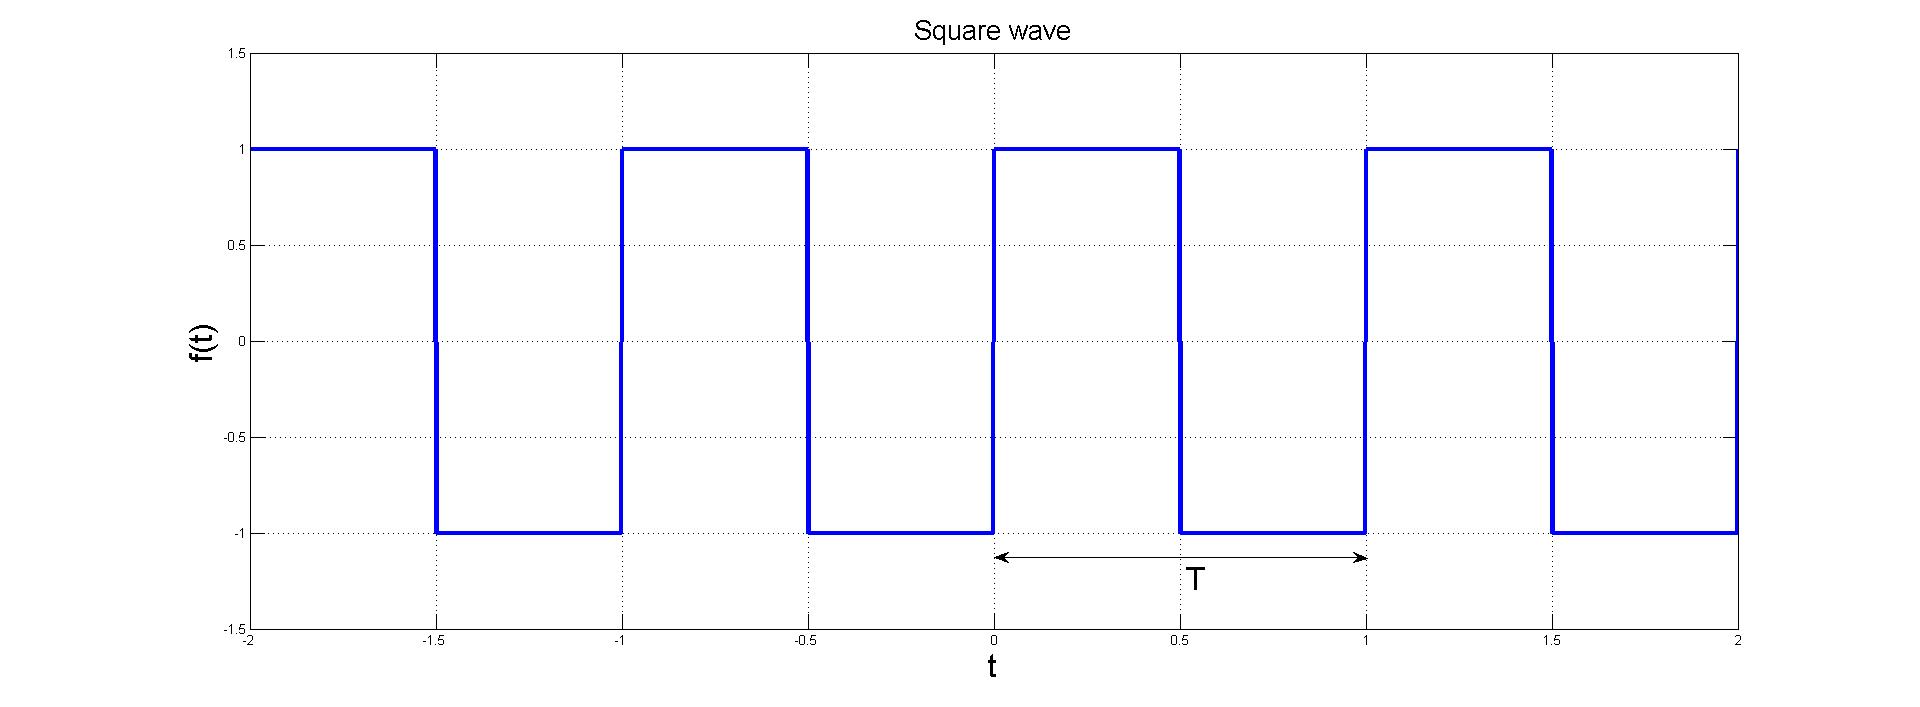 bipolar square wave equation